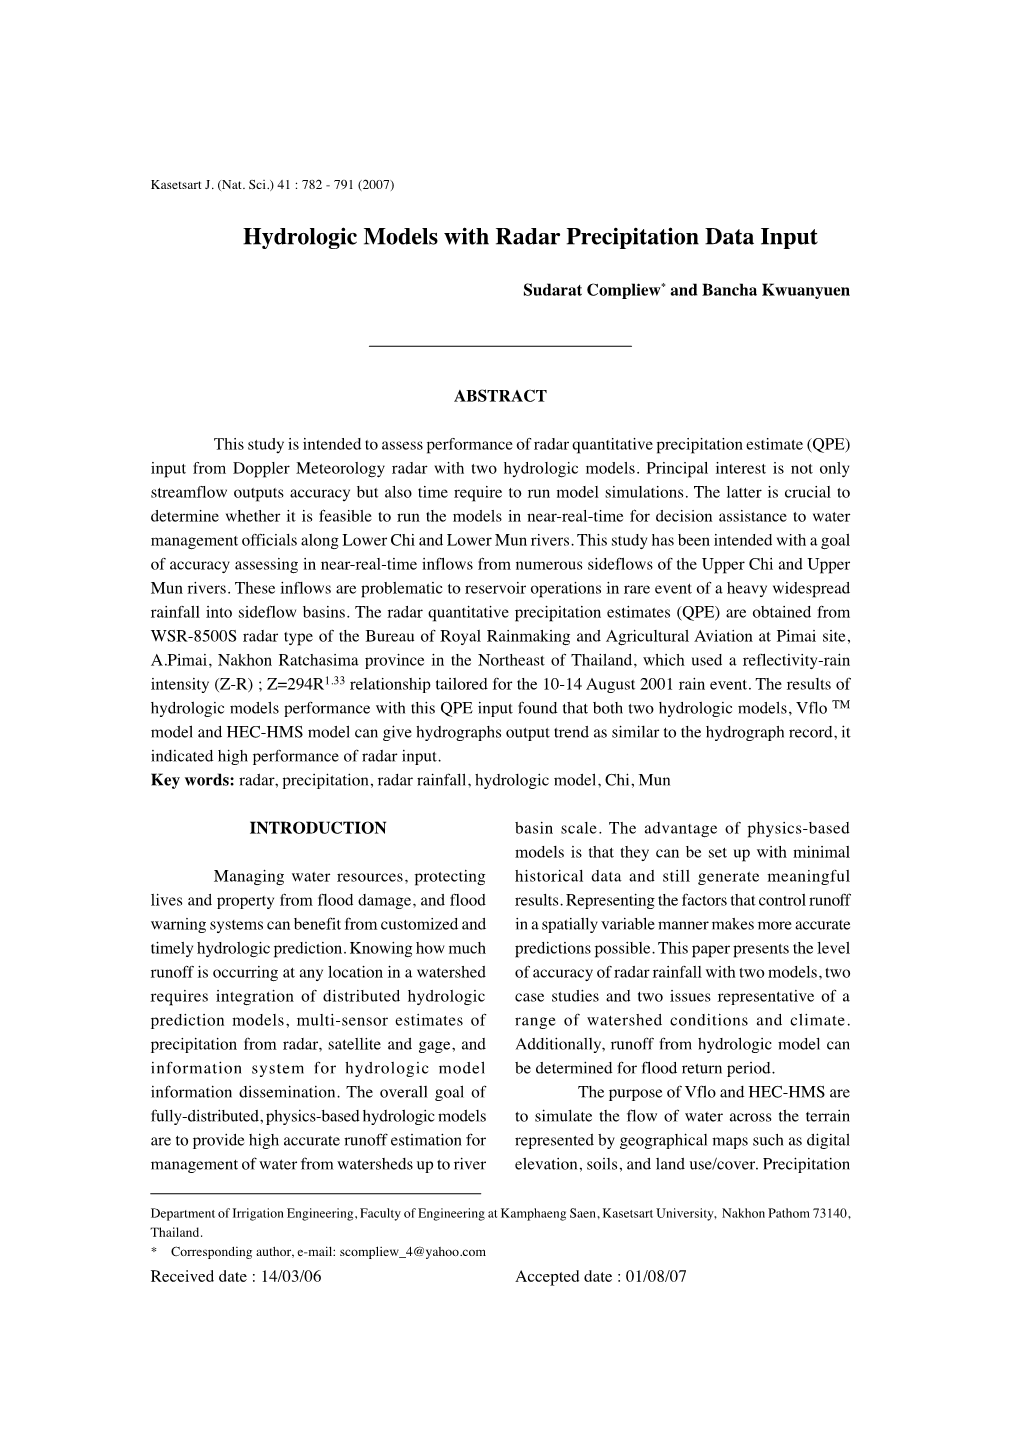 Hydrologic Models with Radar Precipitation Data Input